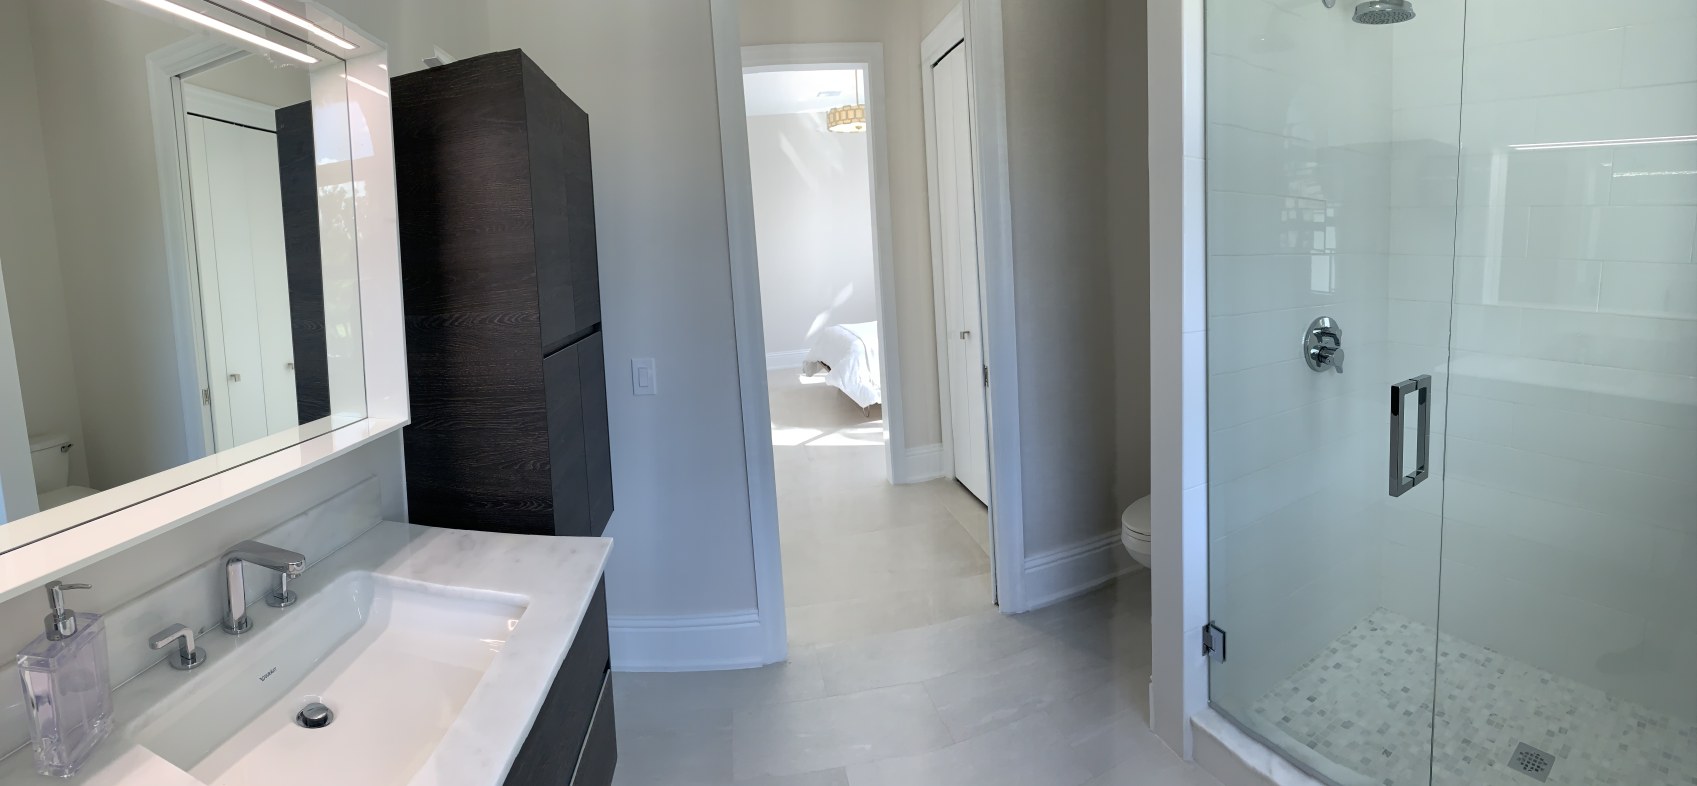 Complete bathroom renovation for guest bedroom-1